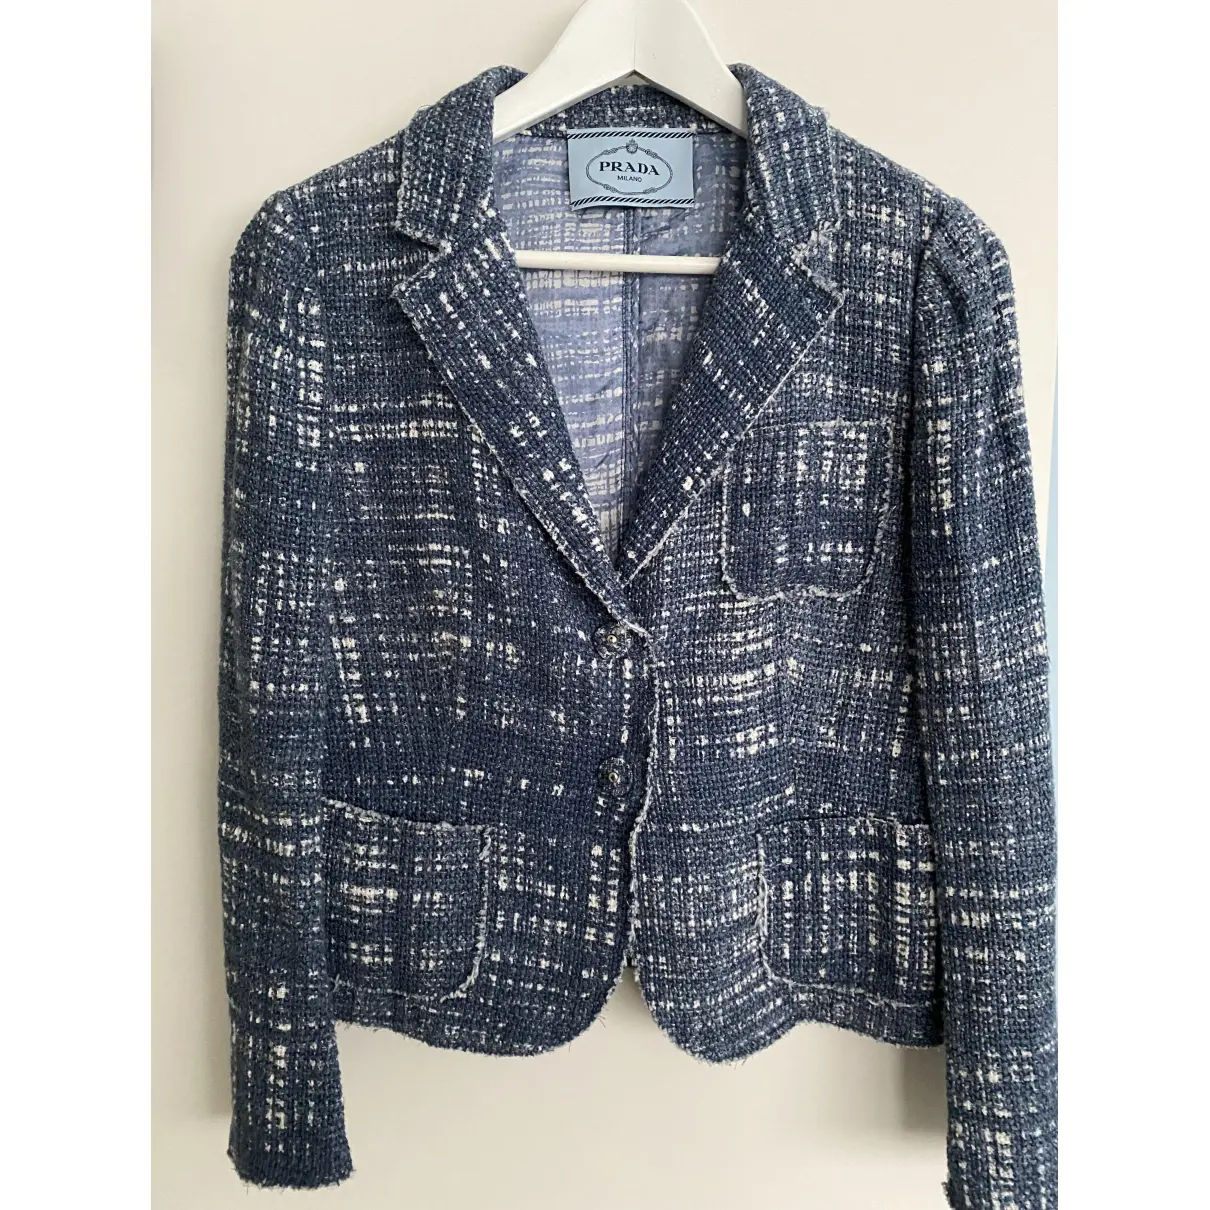 Buy Prada Blue Cotton Jacket online